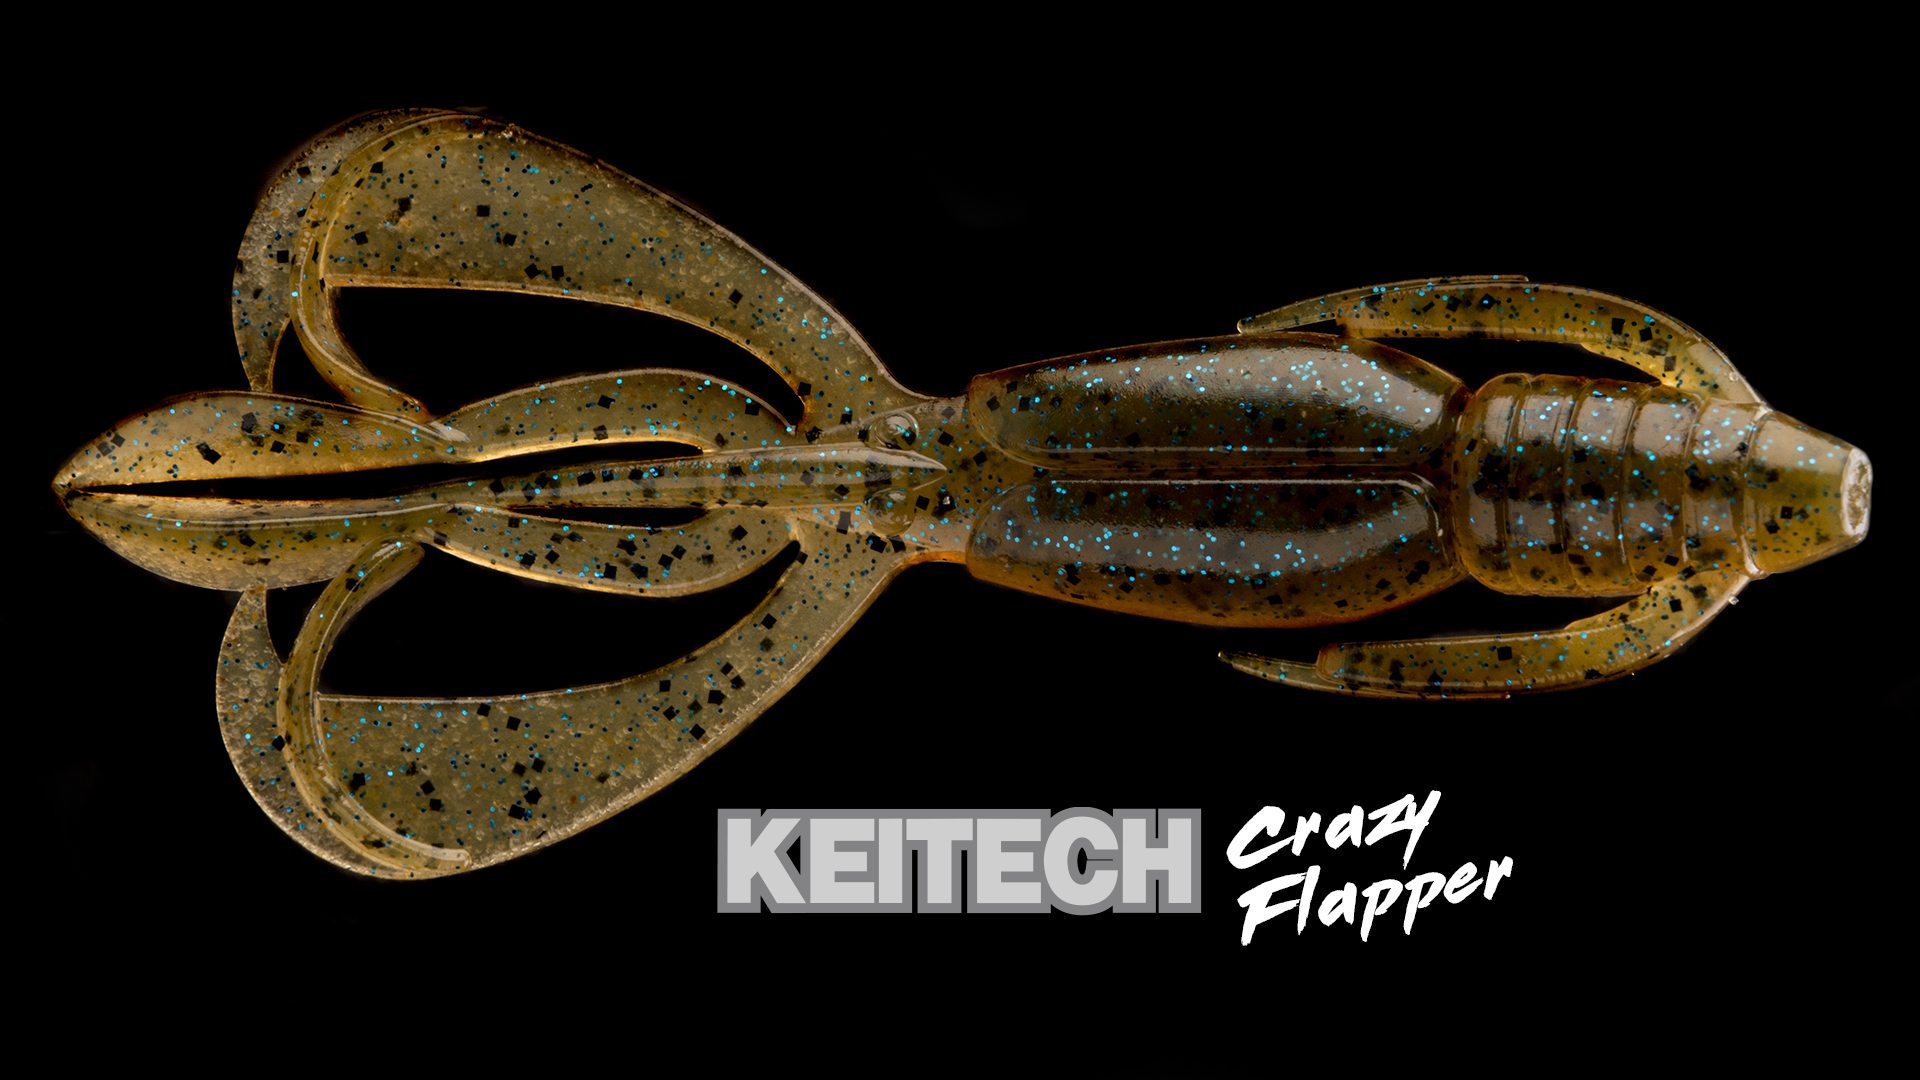 Keitech Crazy Flapper 3,6 inch (9,1cm)